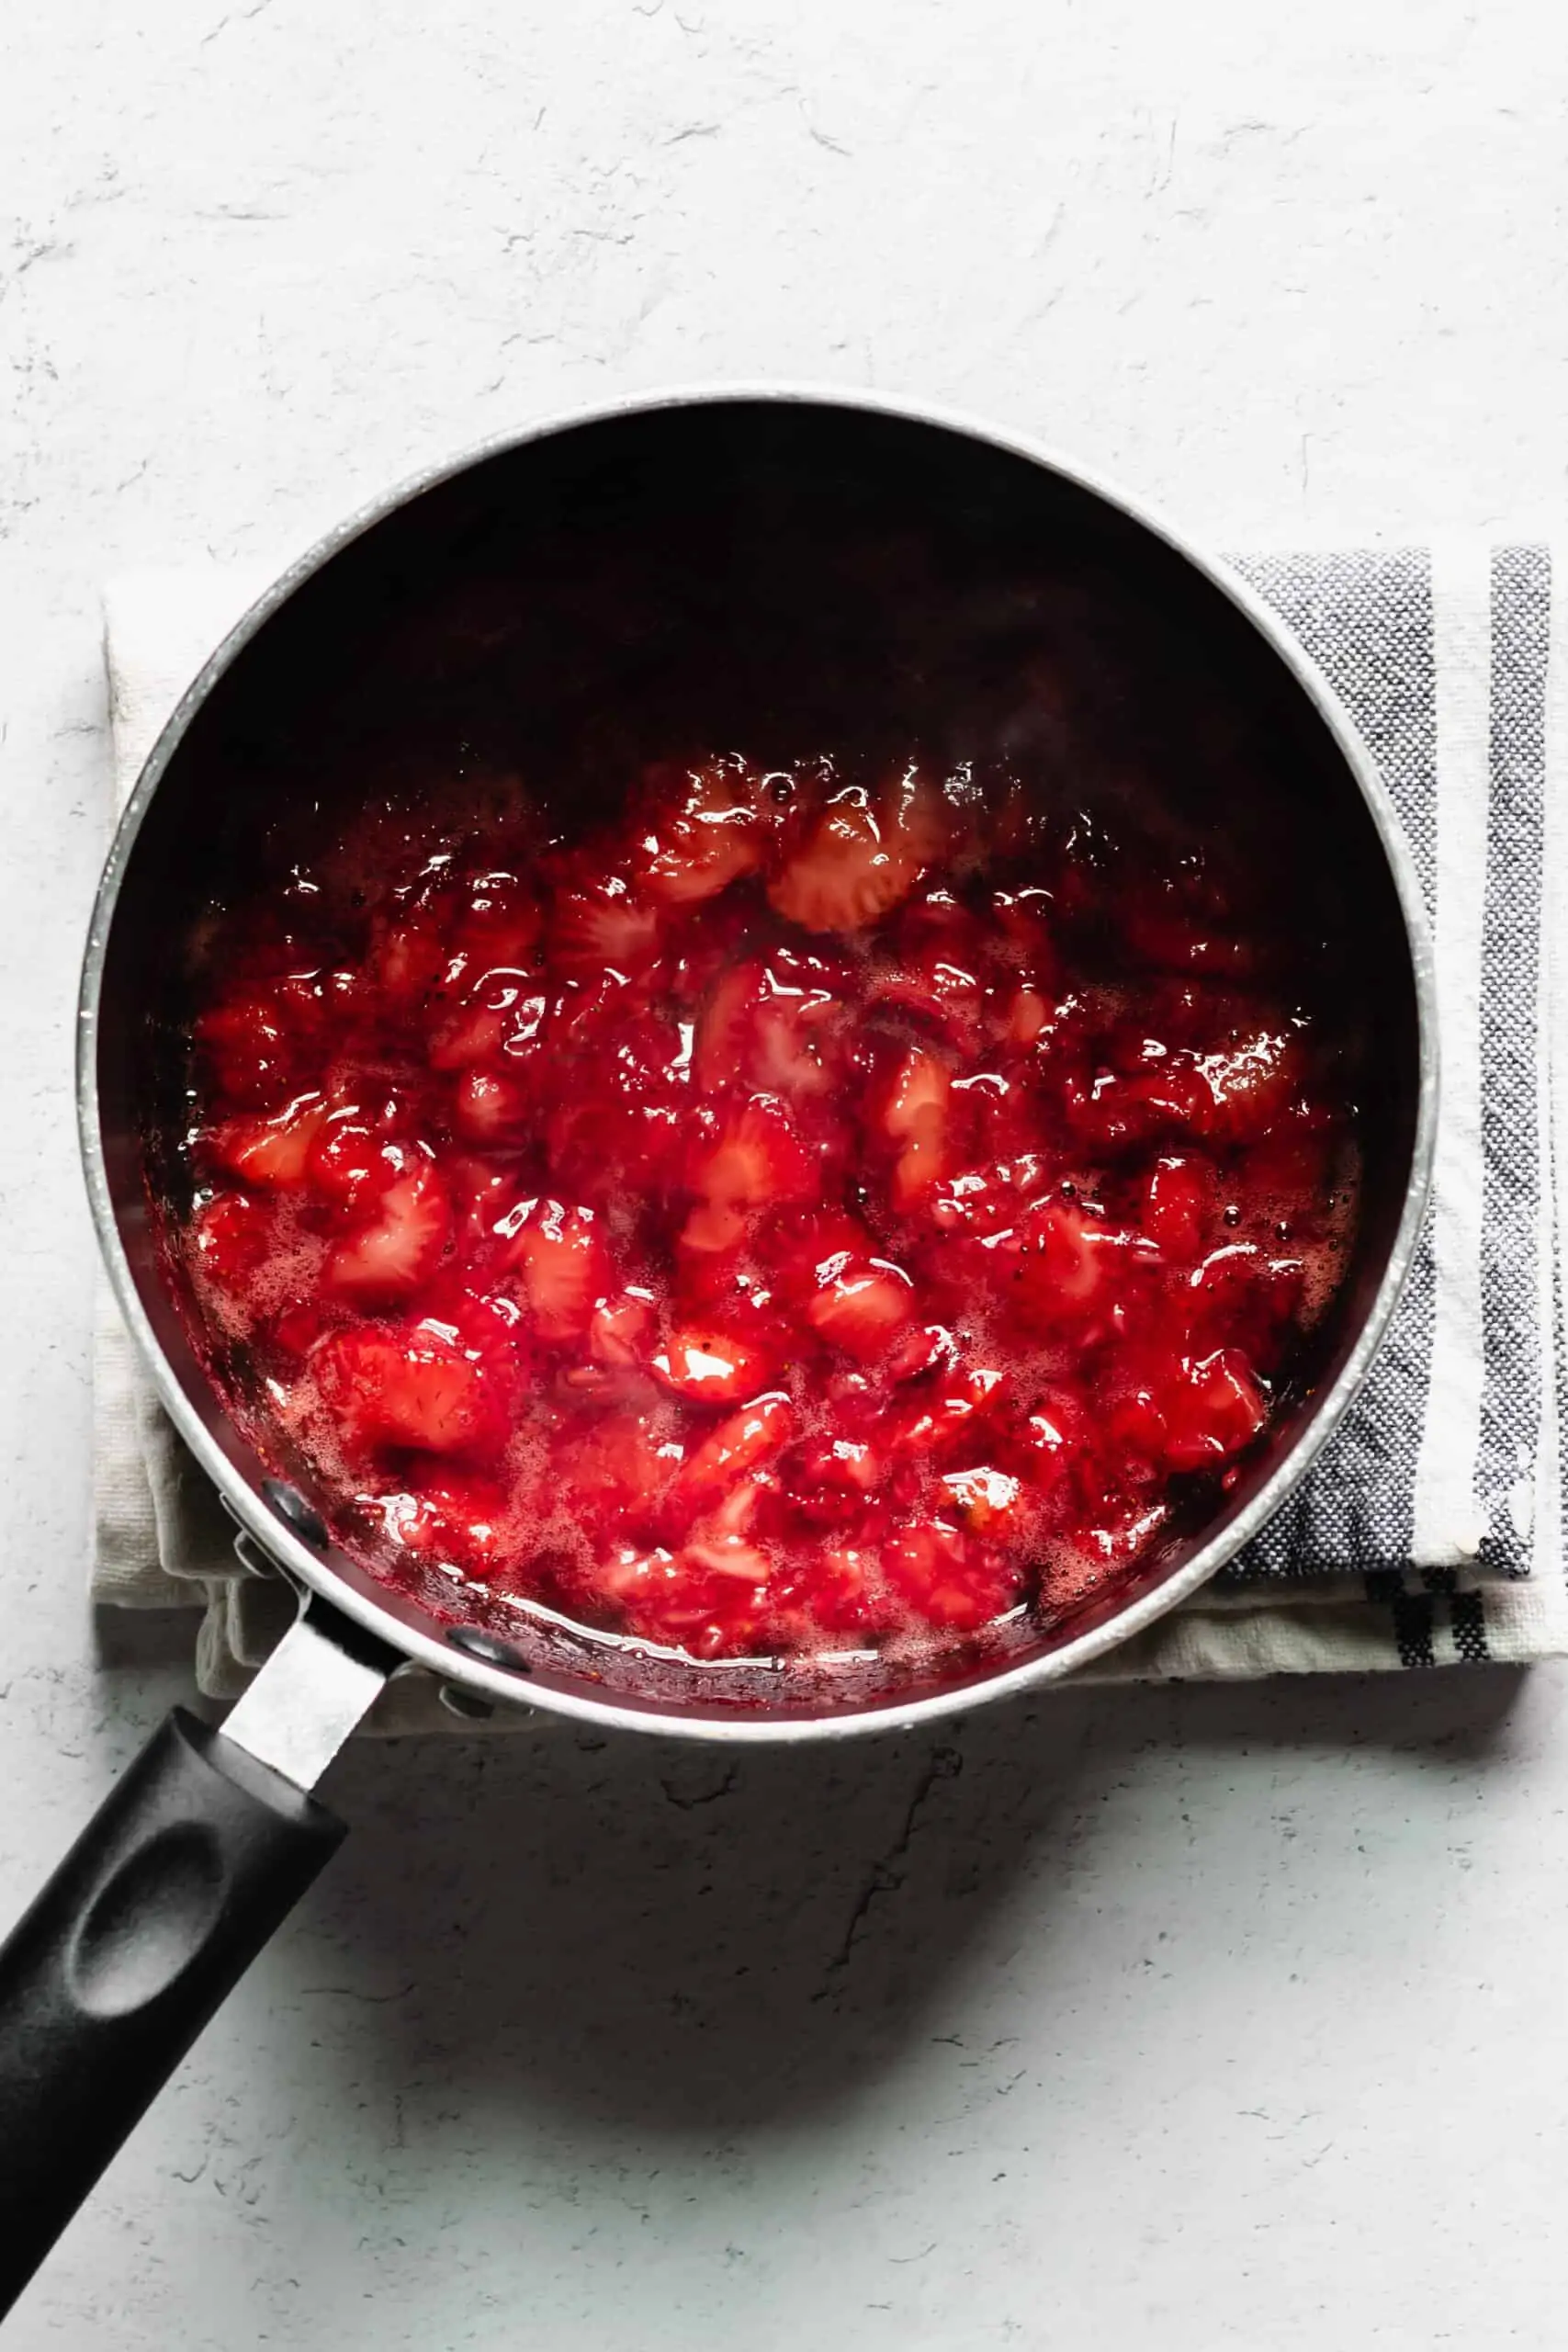 Cut strawberries and sugar in a saucepan cooking down.